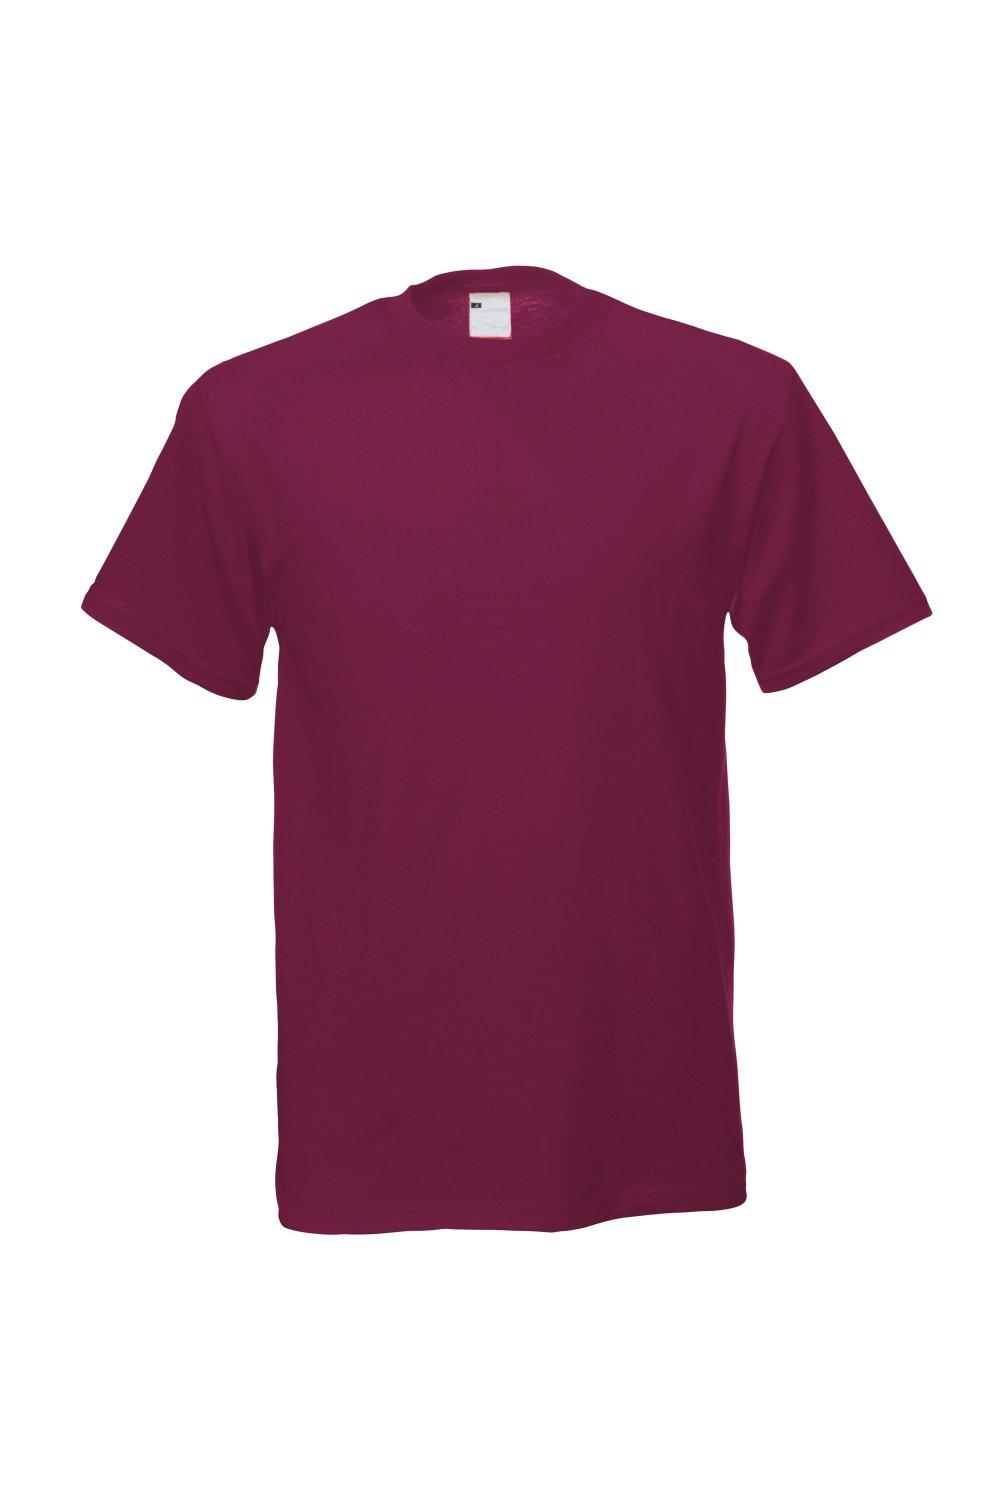 Повседневная футболка с коротким рукавом Universal Textiles, красный повседневная футболка с коротким рукавом universal textiles синий